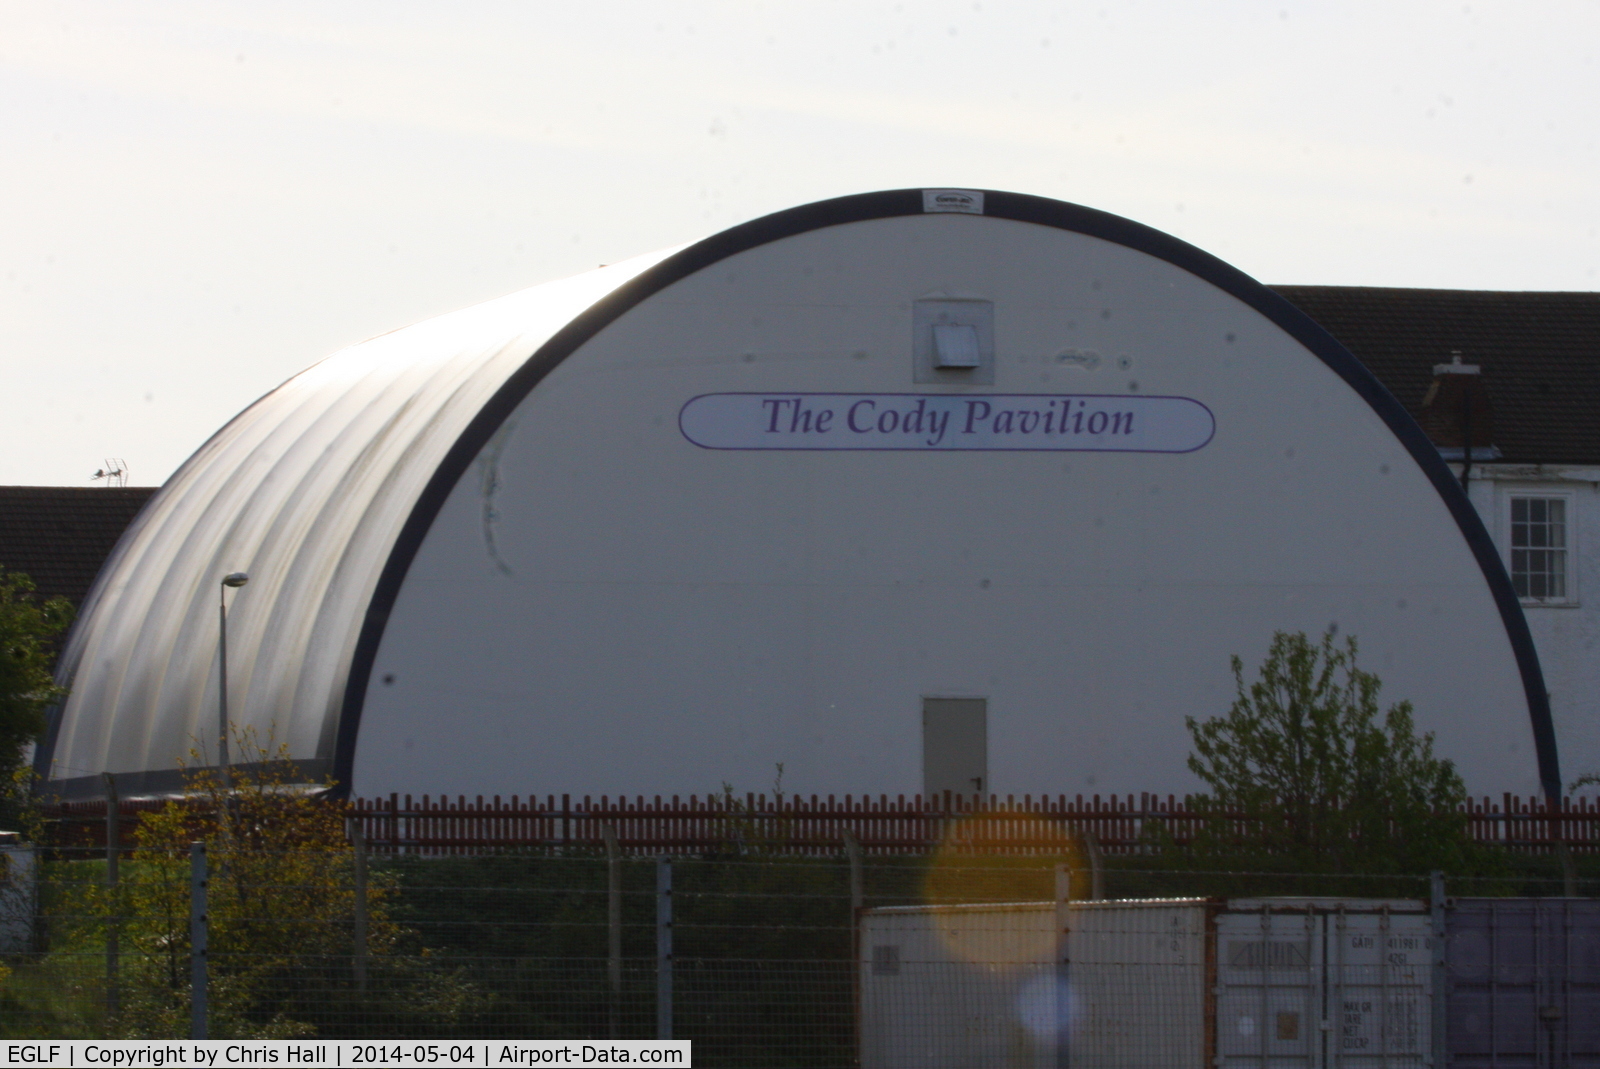 Farnborough Airfield Airport, Farnborough, England United Kingdom (EGLF) - The Cody Pavillion which houses the Cody 1A replica at the FAST Museum